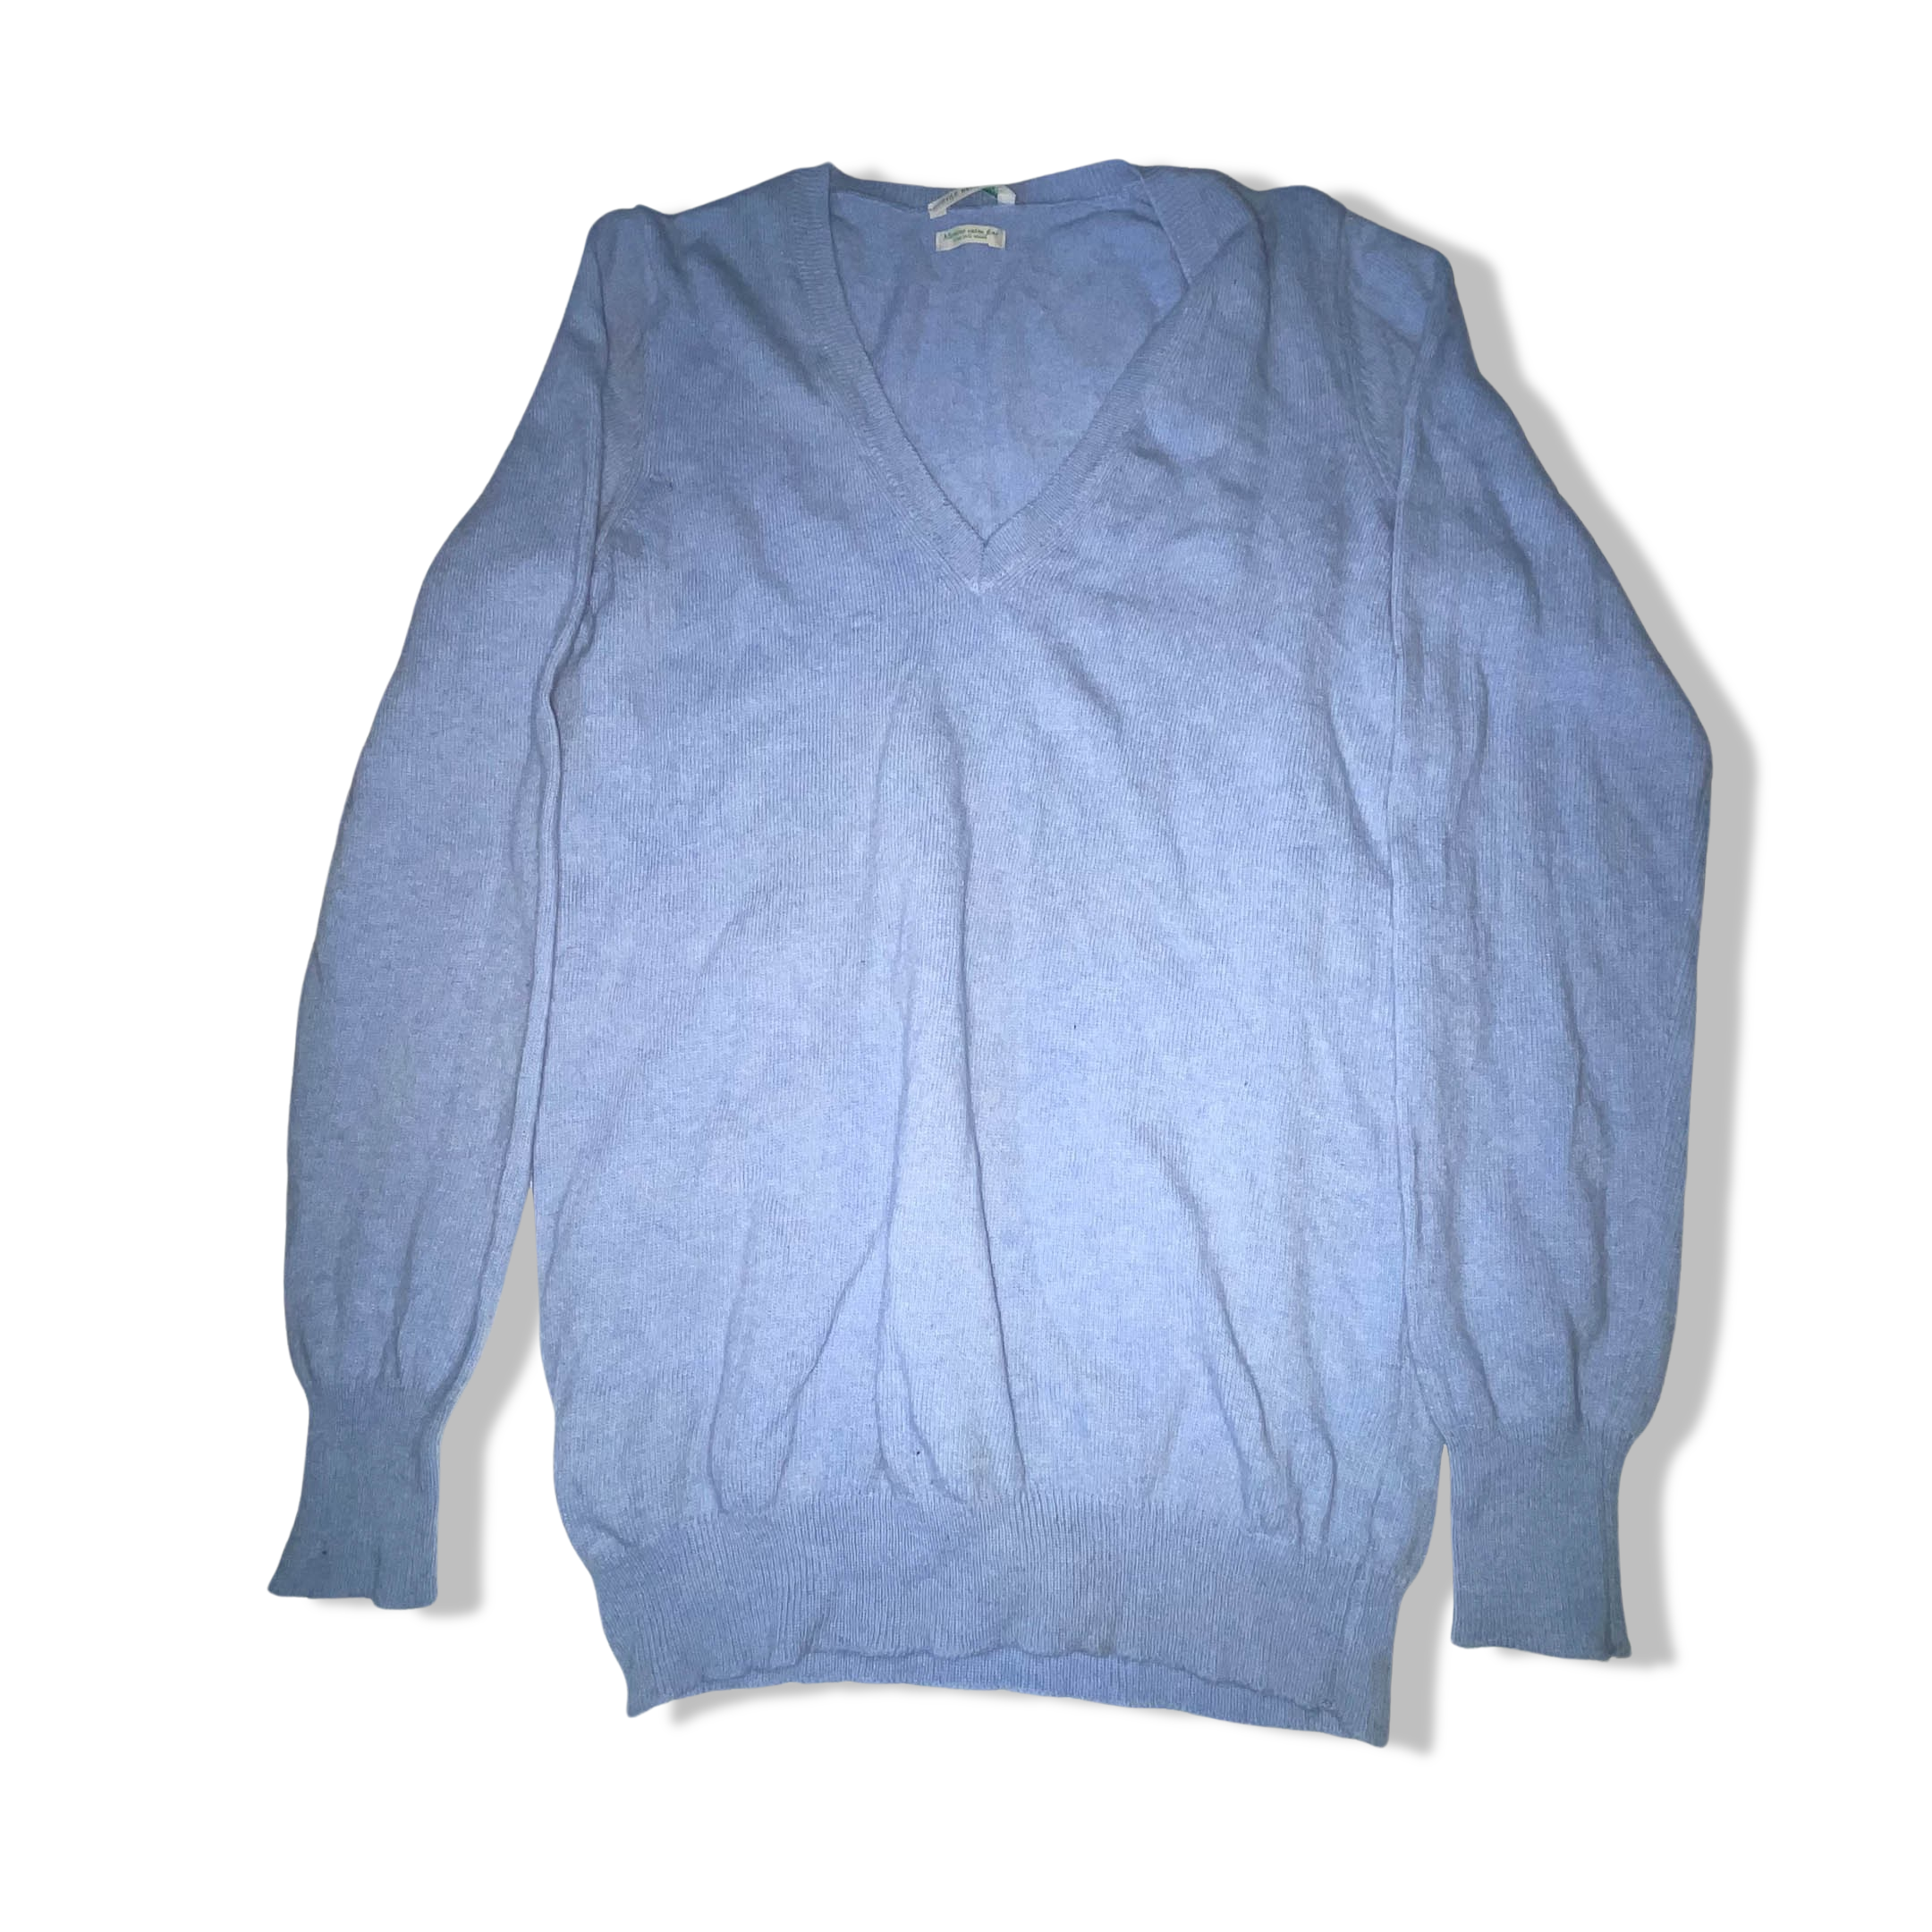 Vintage Stile benetton medium womens blue V-neck sweatshirt